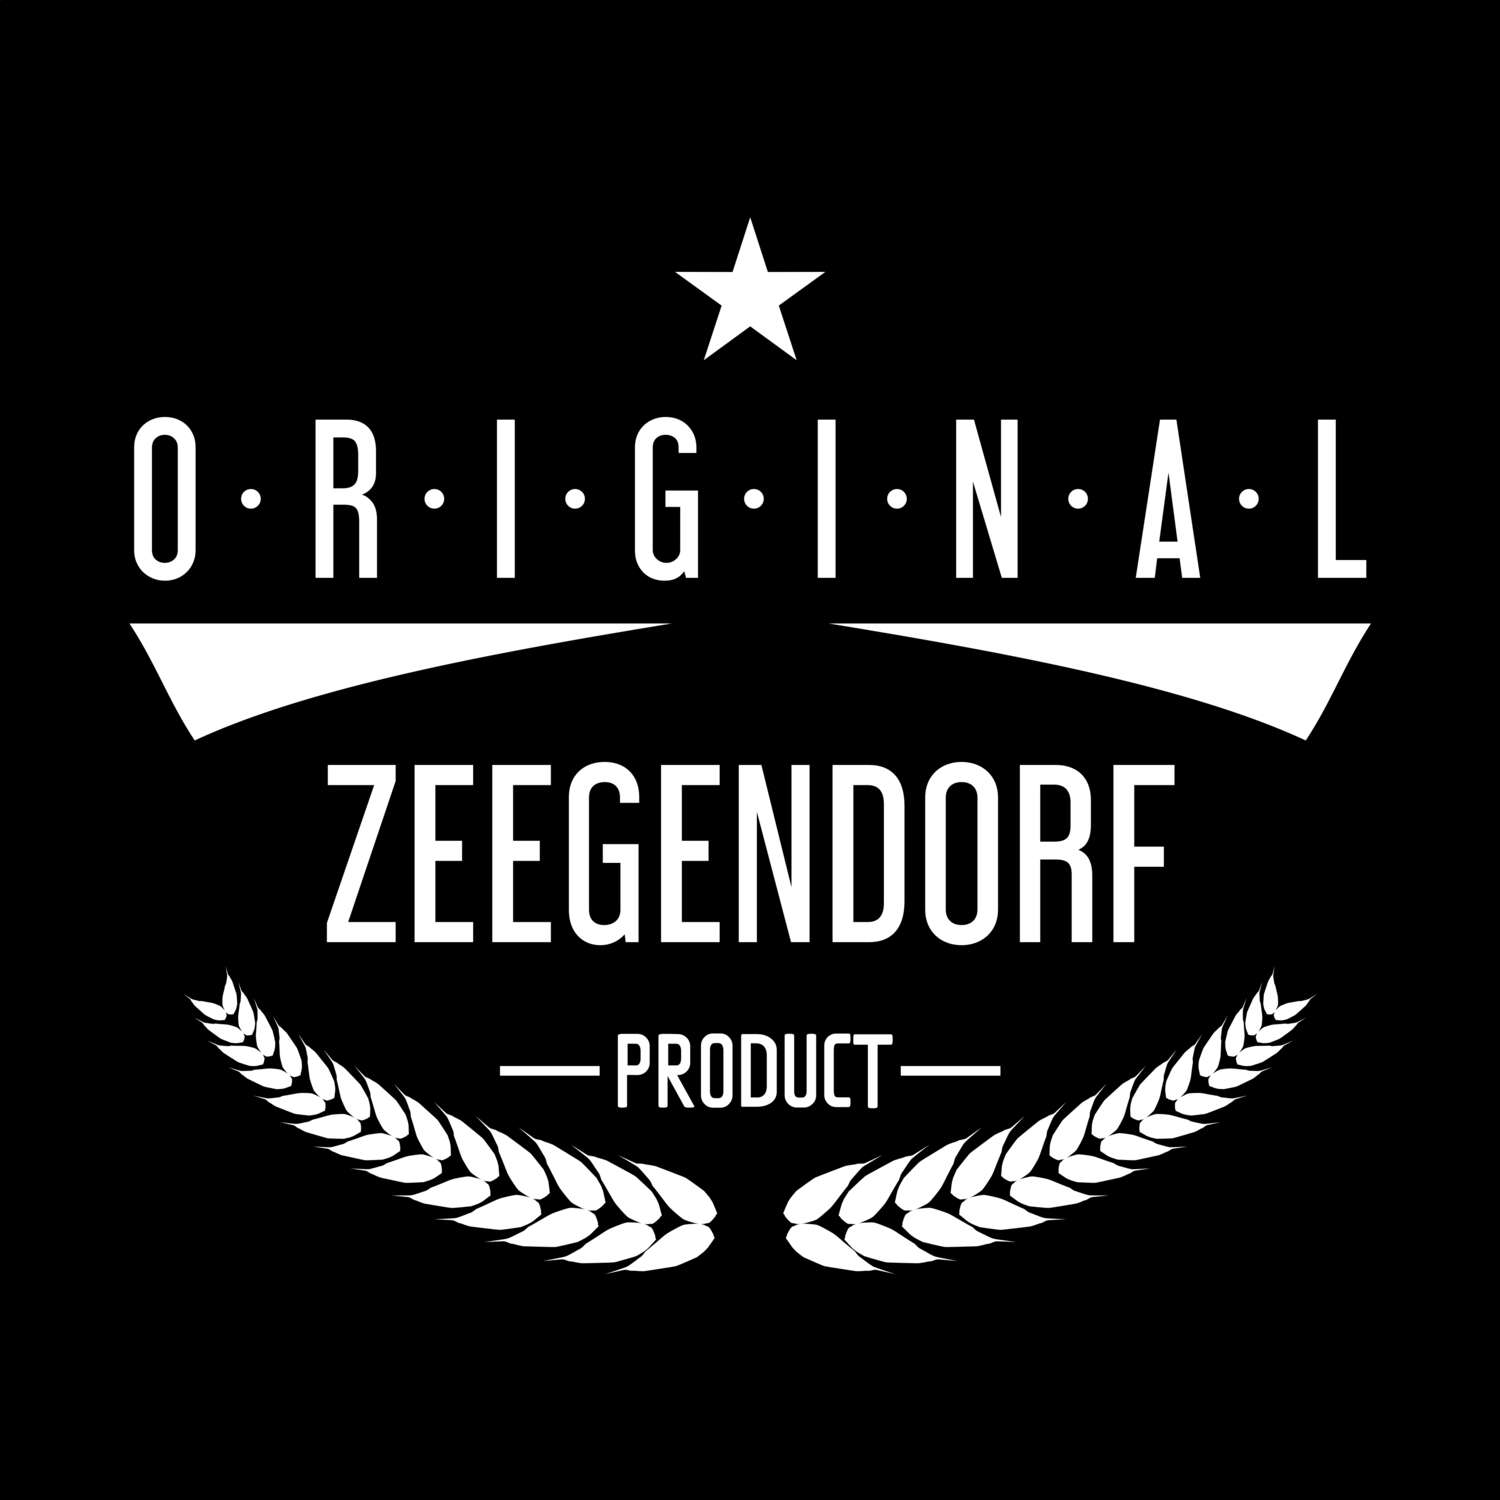 Zeegendorf T-Shirt »Original Product«